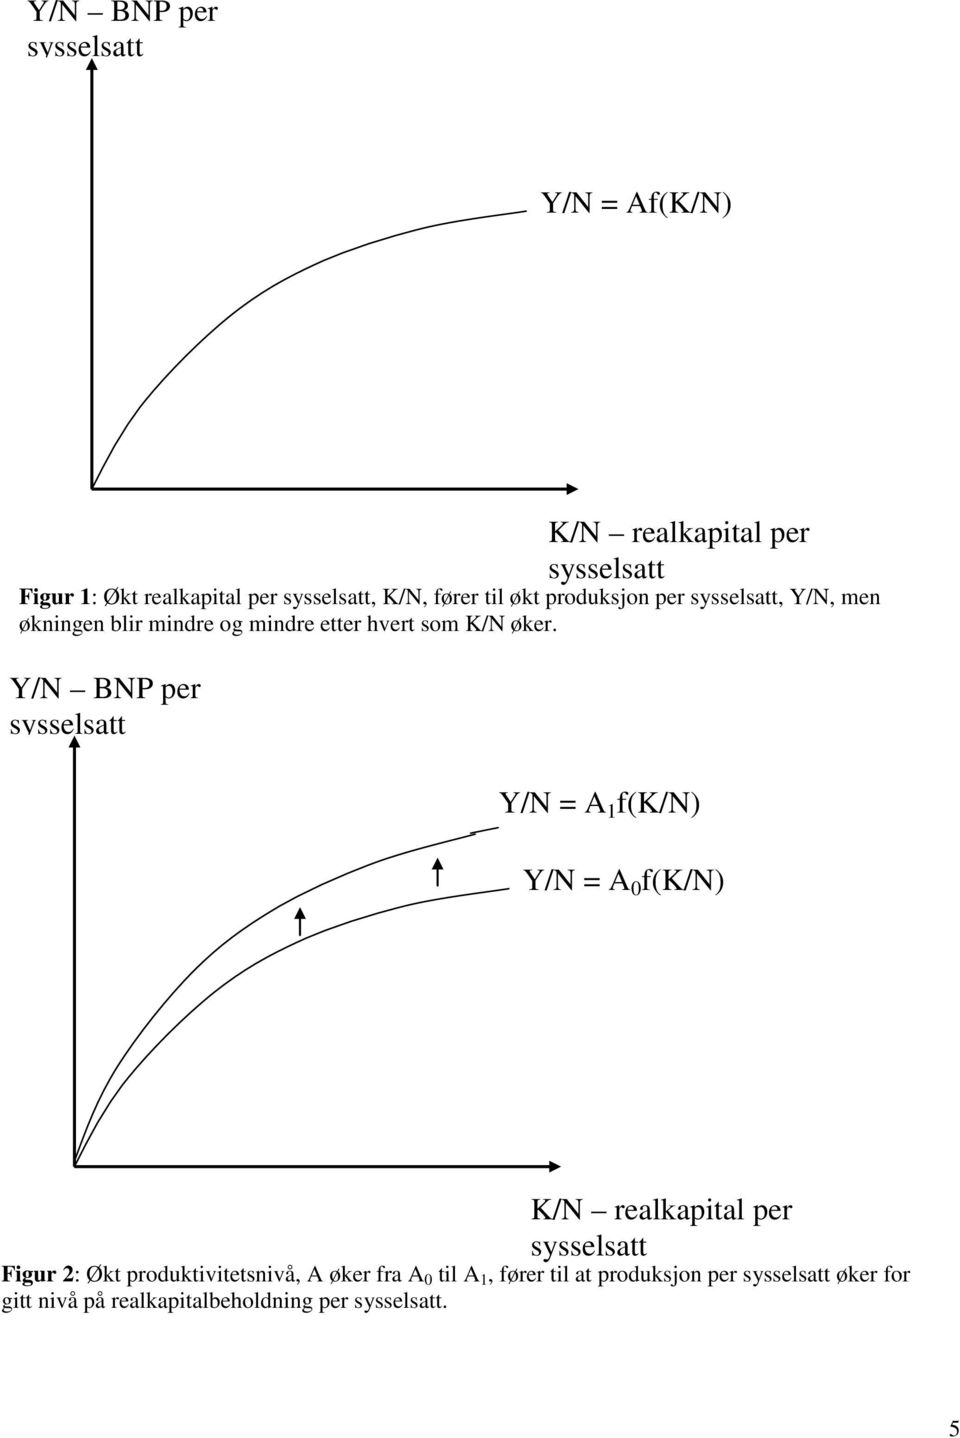 Y/N BNP per sysselsatt Y/N = A 1 f(k/n) Y/N = A 0 f(k/n) K/N realkapital per sysselsatt Figur 2: Økt